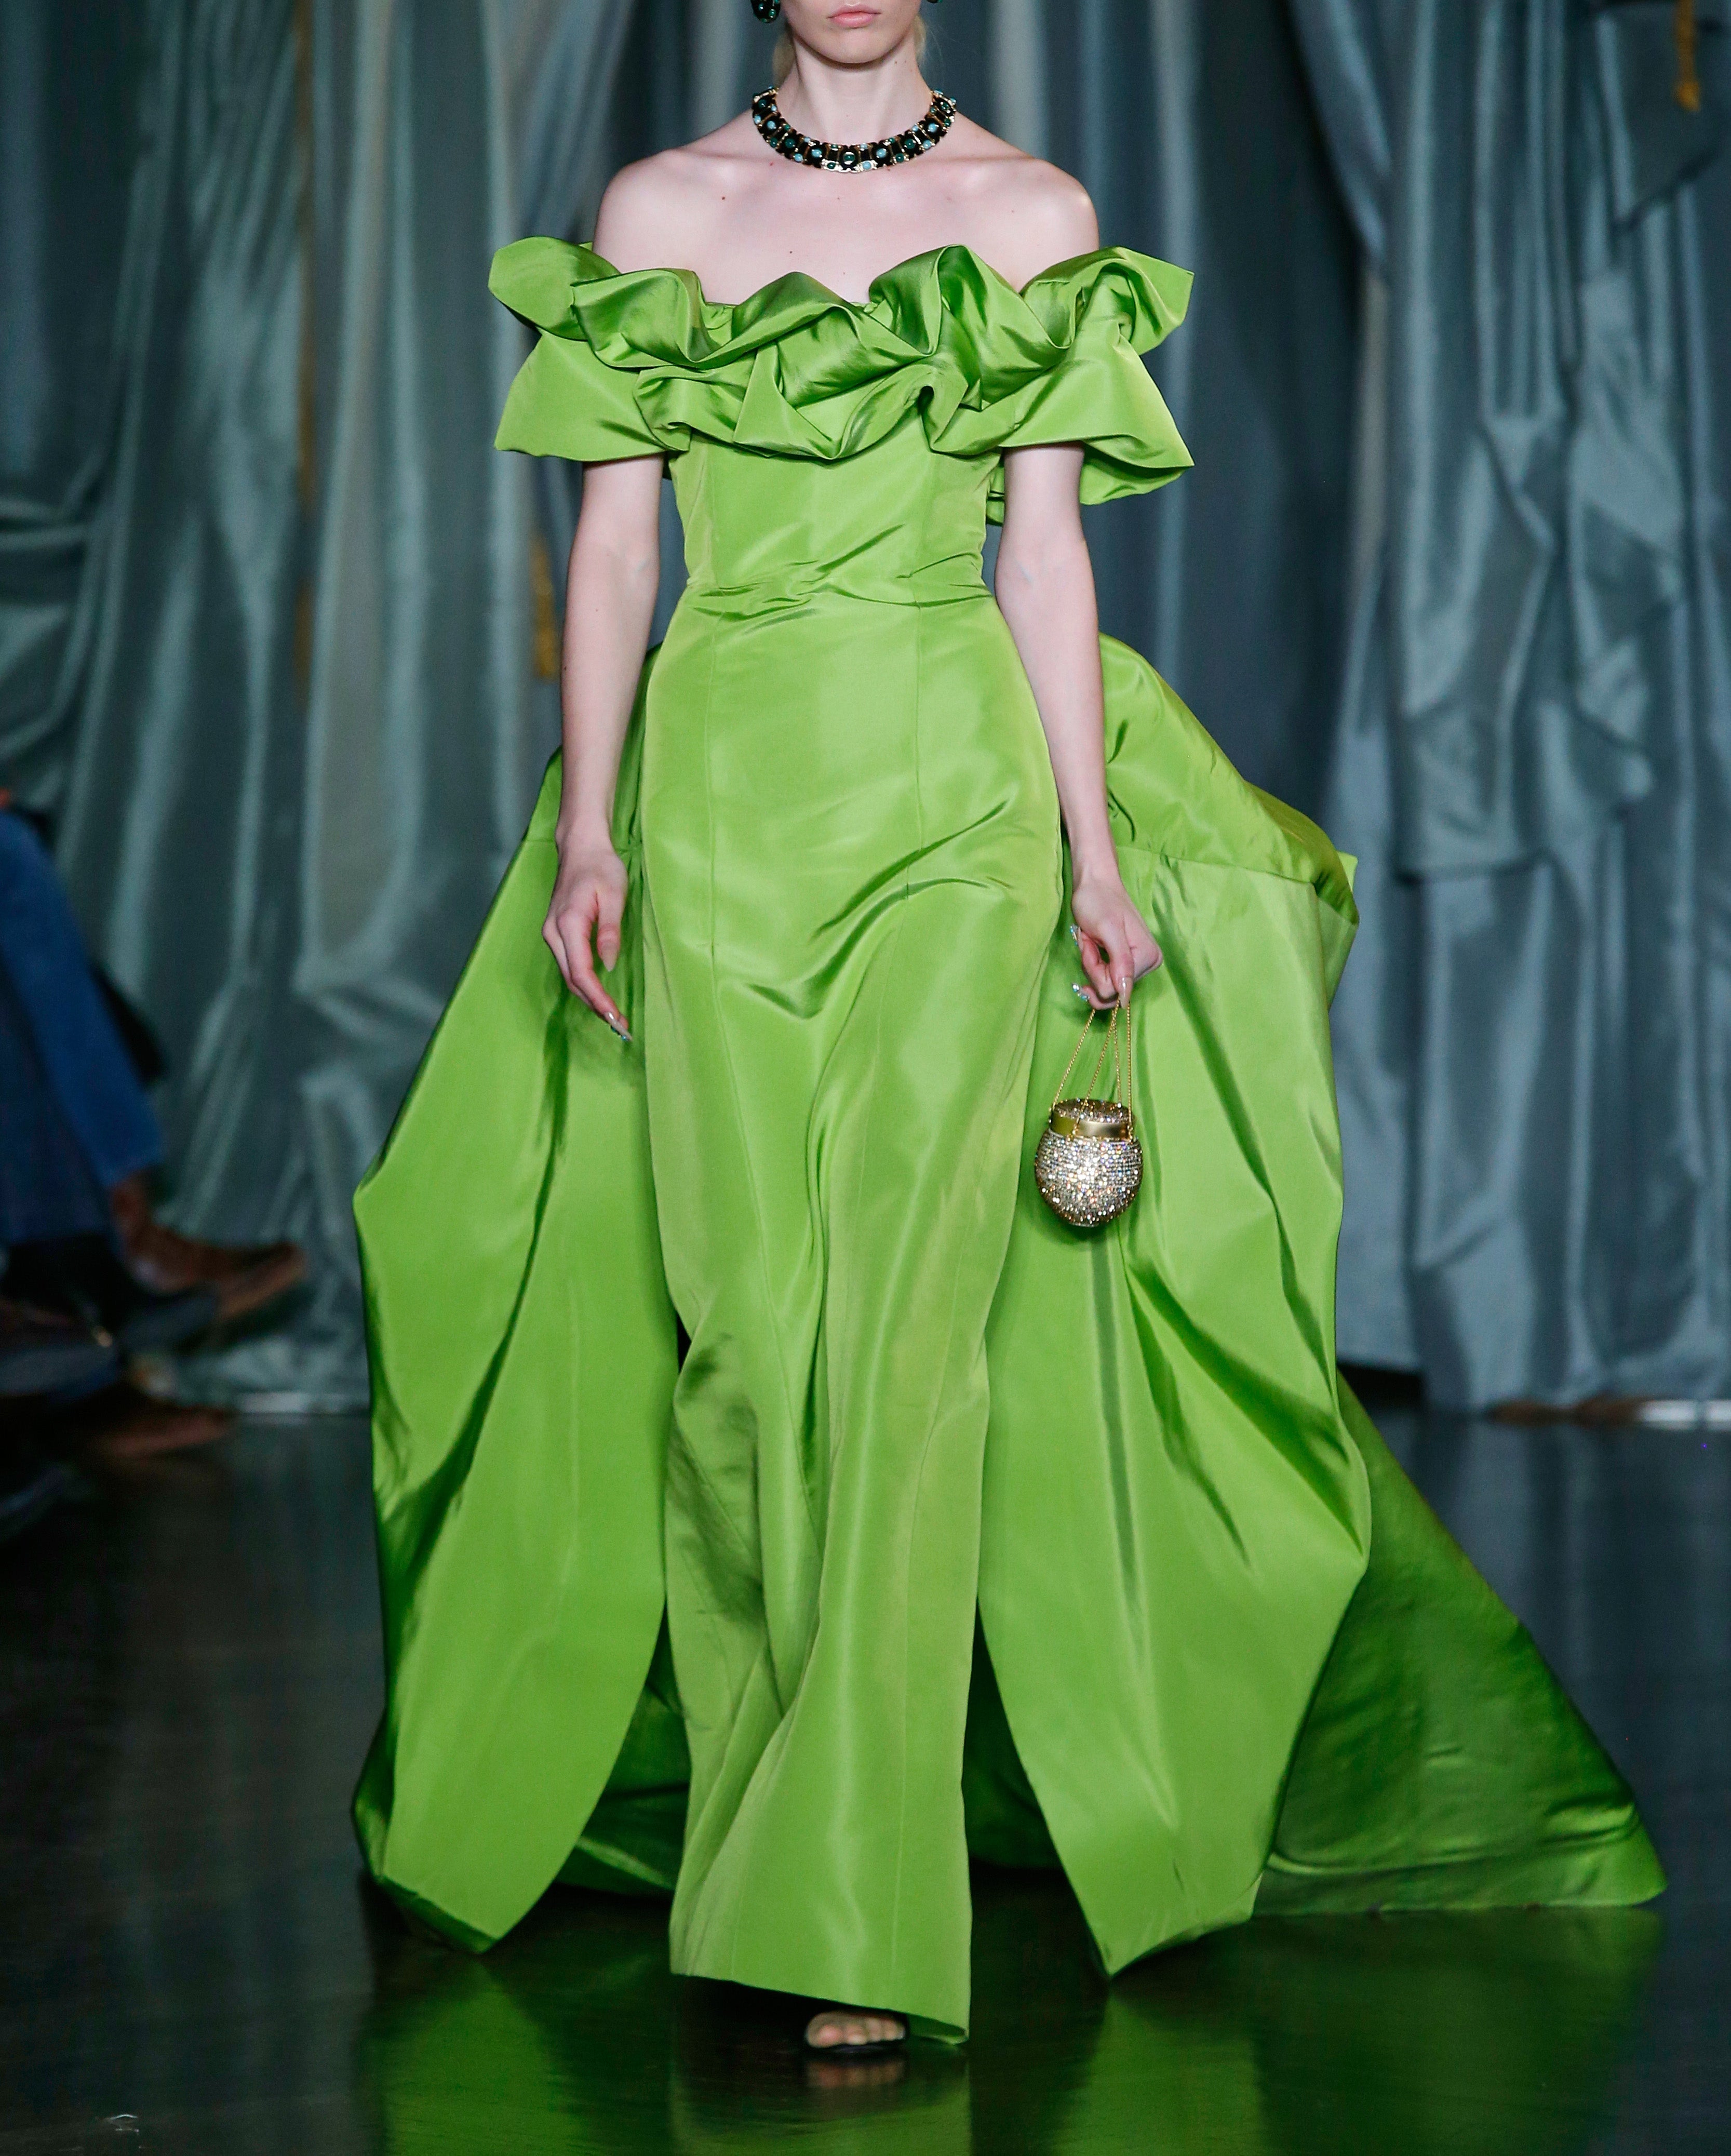 Etta Chartreuse Ruffle Gown